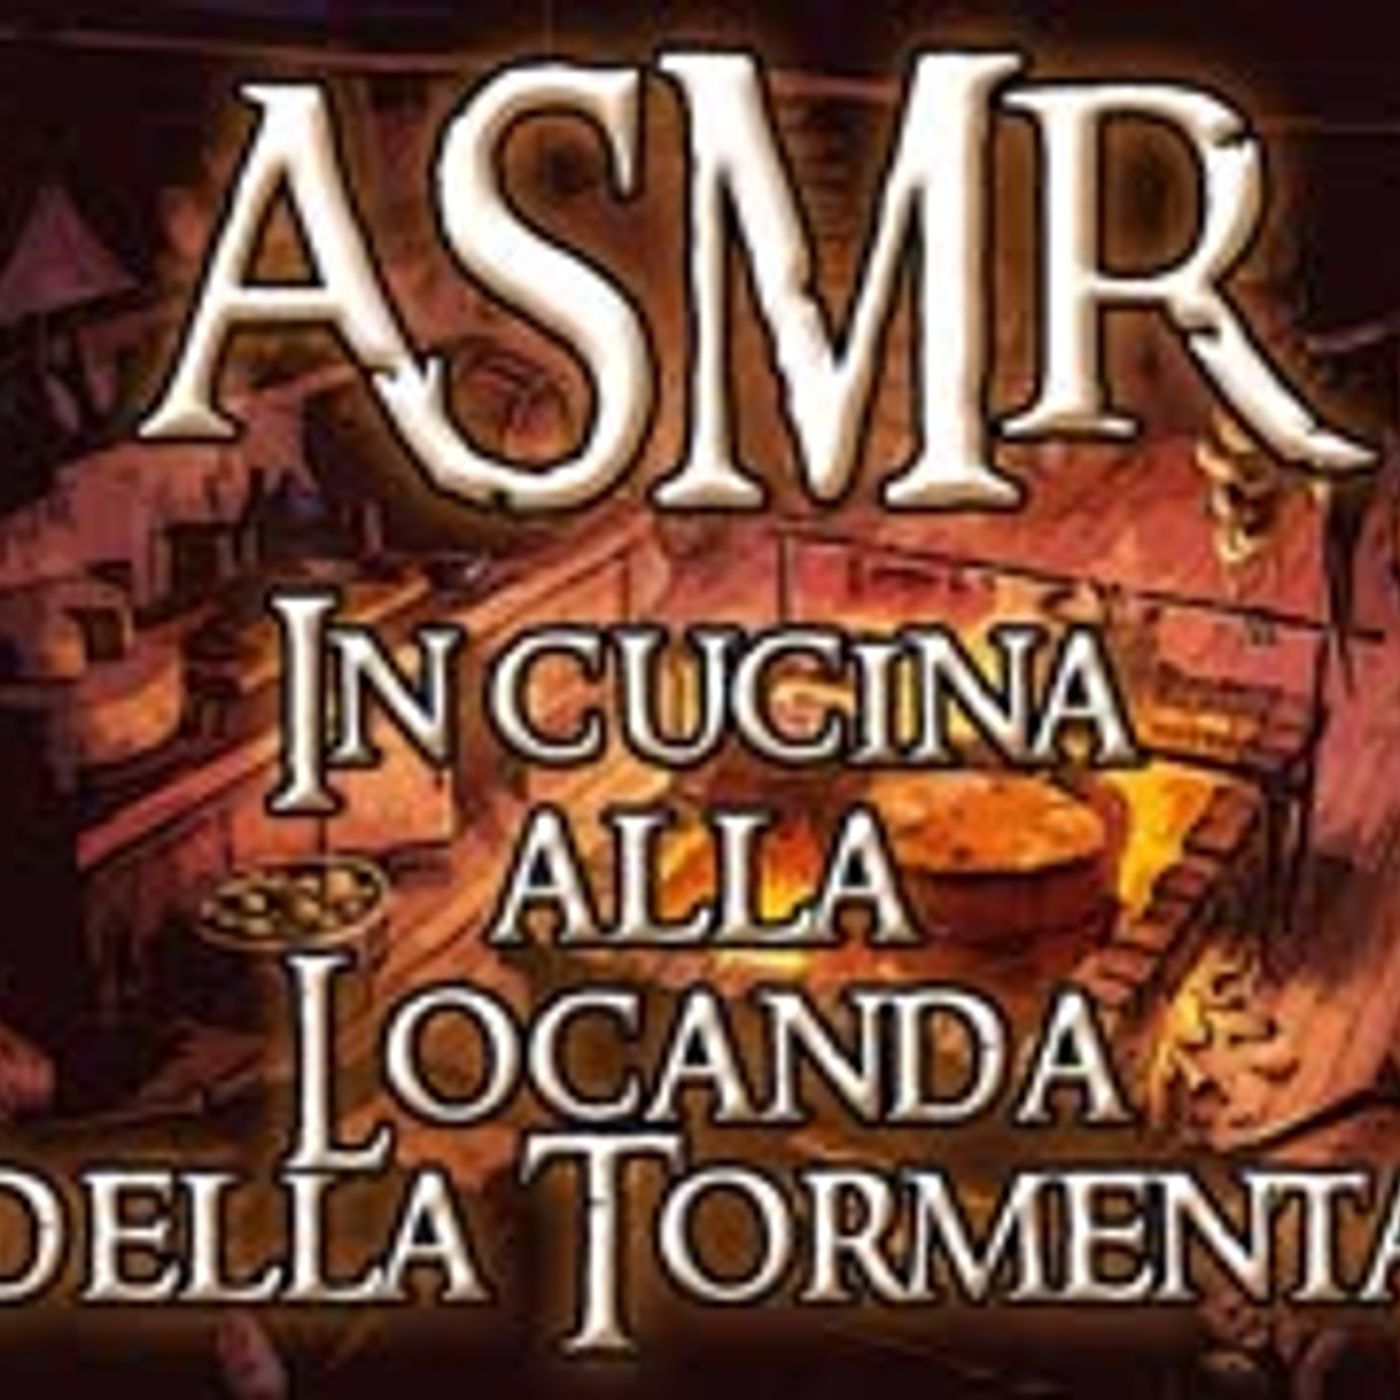 ASMR - In Cucina alla Locanda della Tormenta (kitchen-relax-asmr)